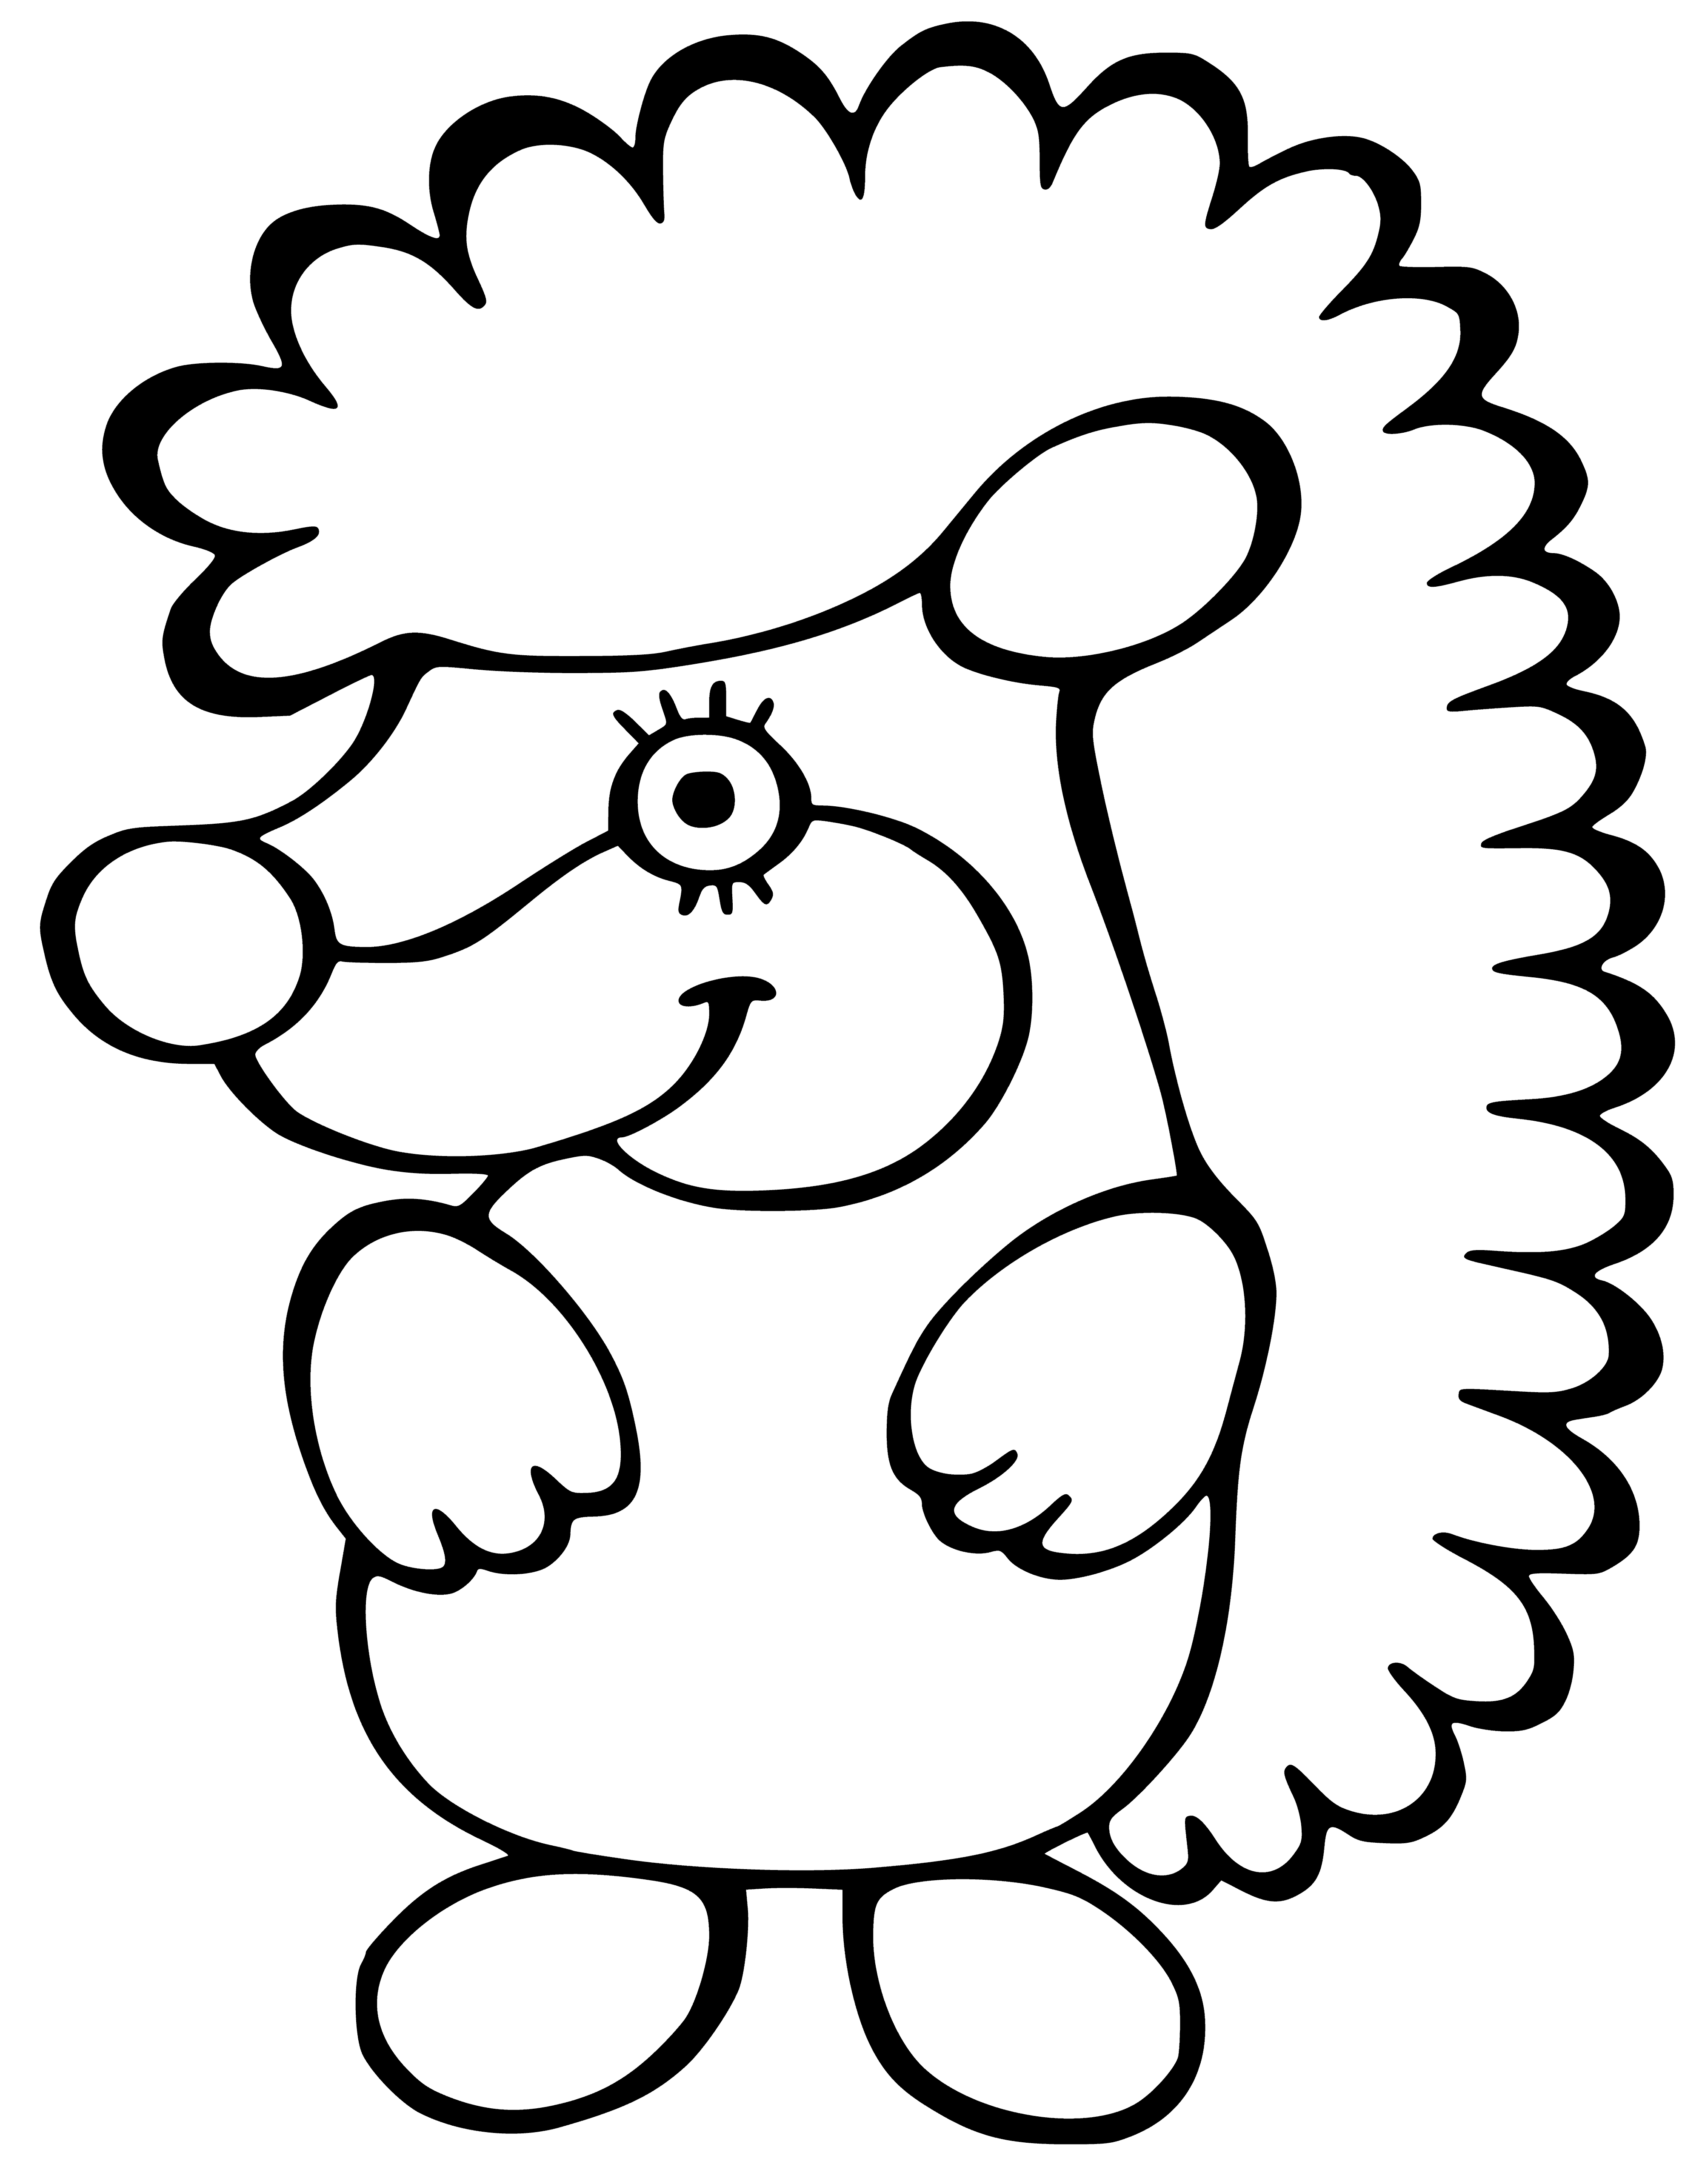 Hedgehog coloring page